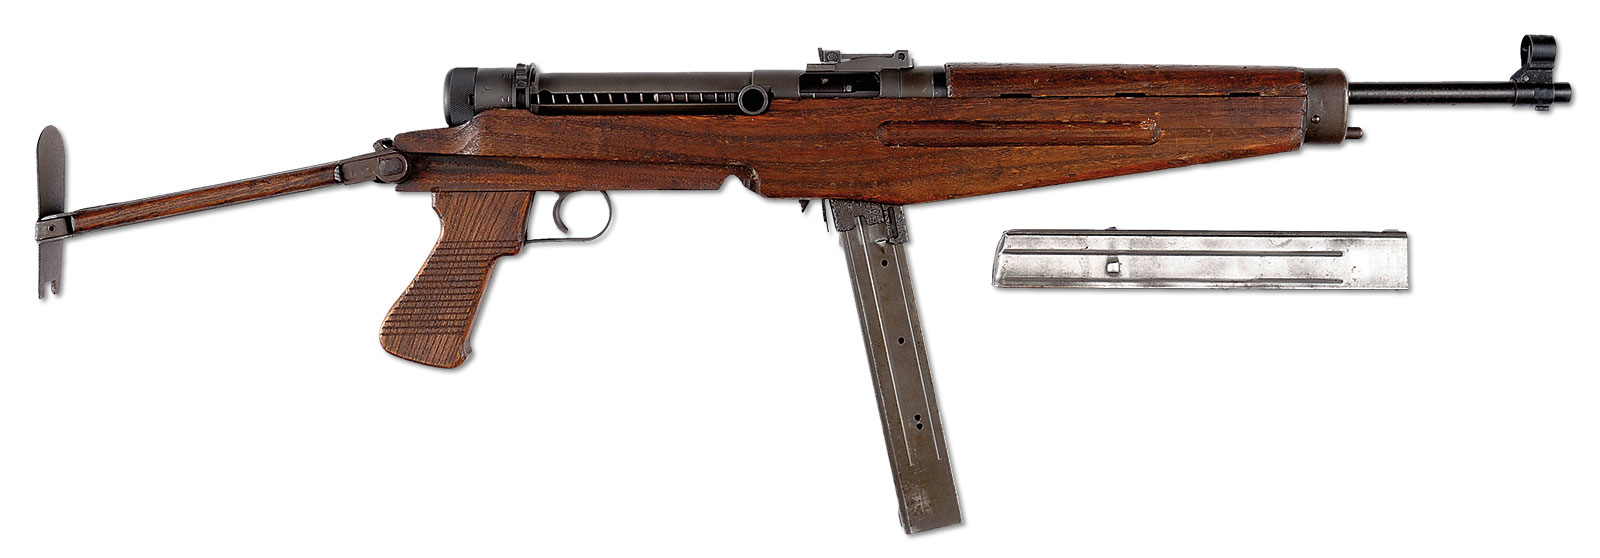 WWII Hungarian Model 43M Machine Gun, estimated at $30,000-50,000.